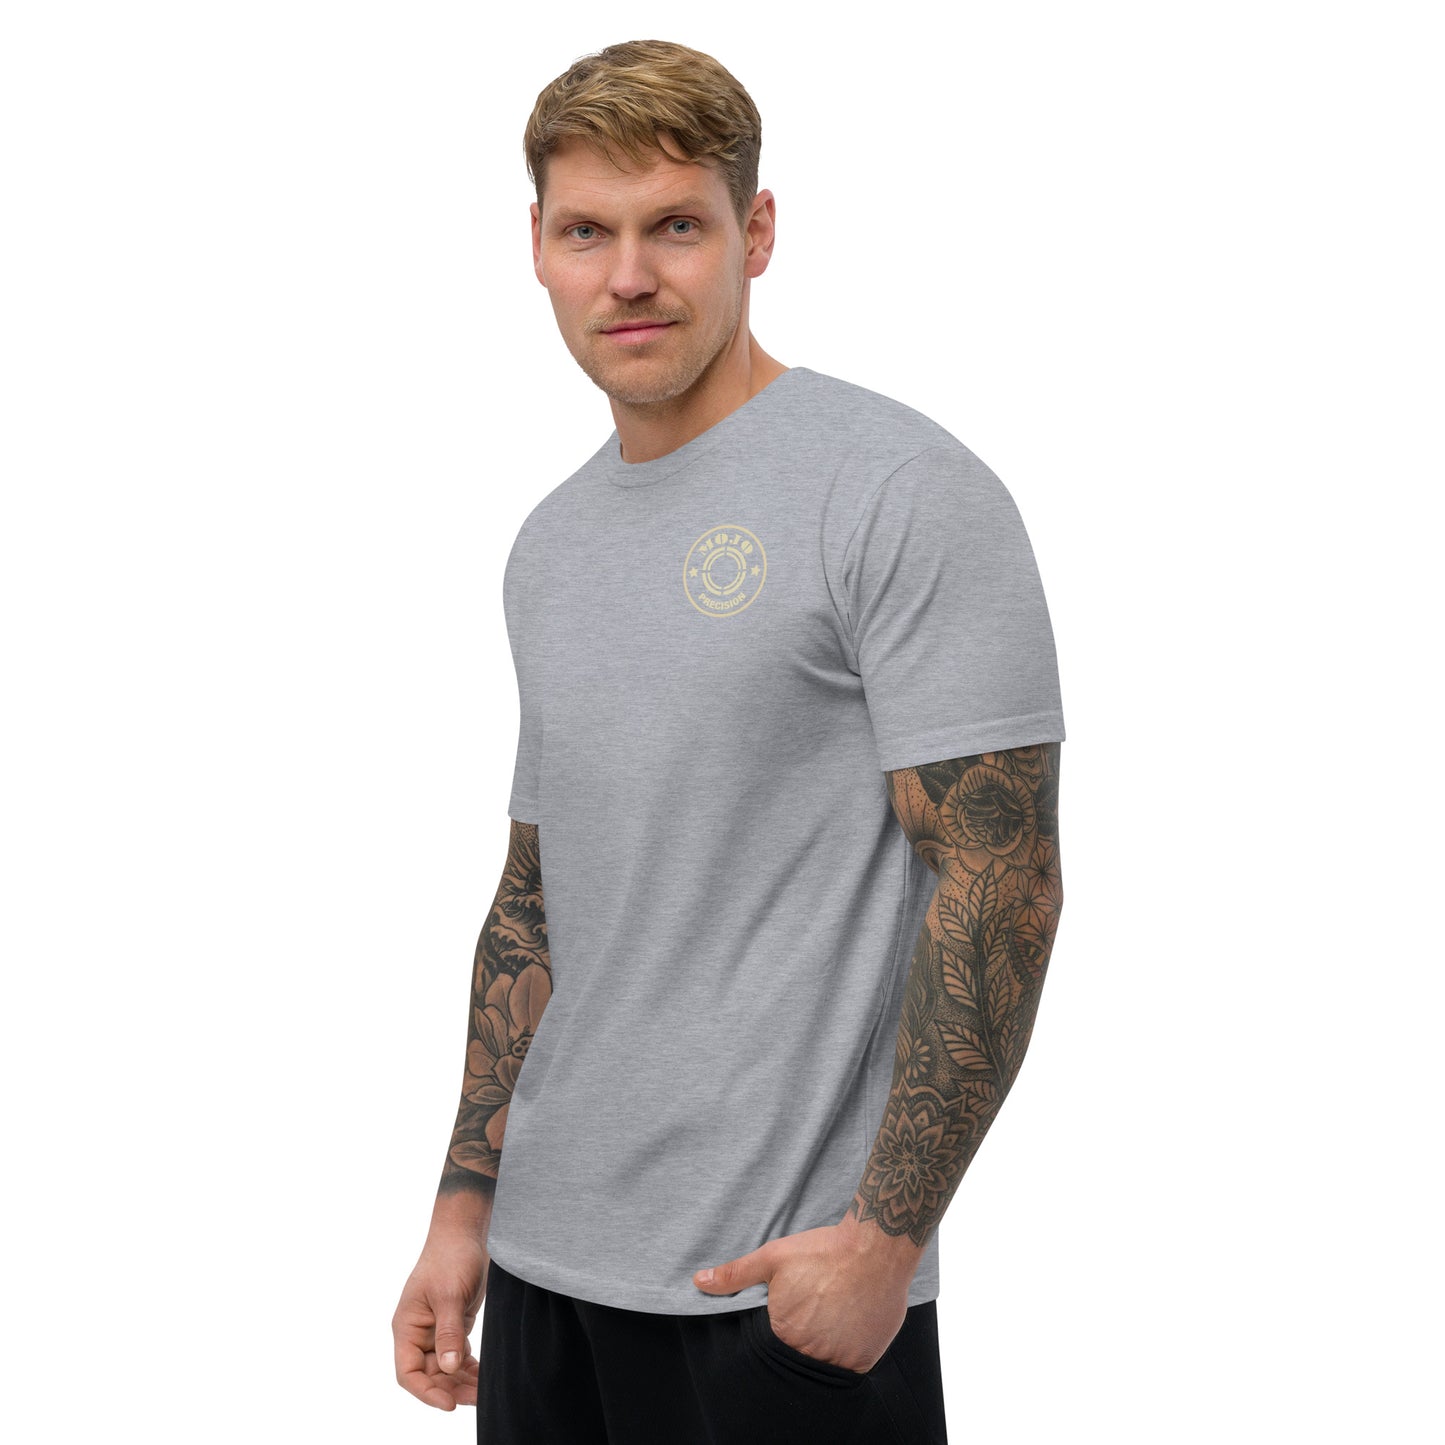 Lumber Jack Short Sleeve T-shirt